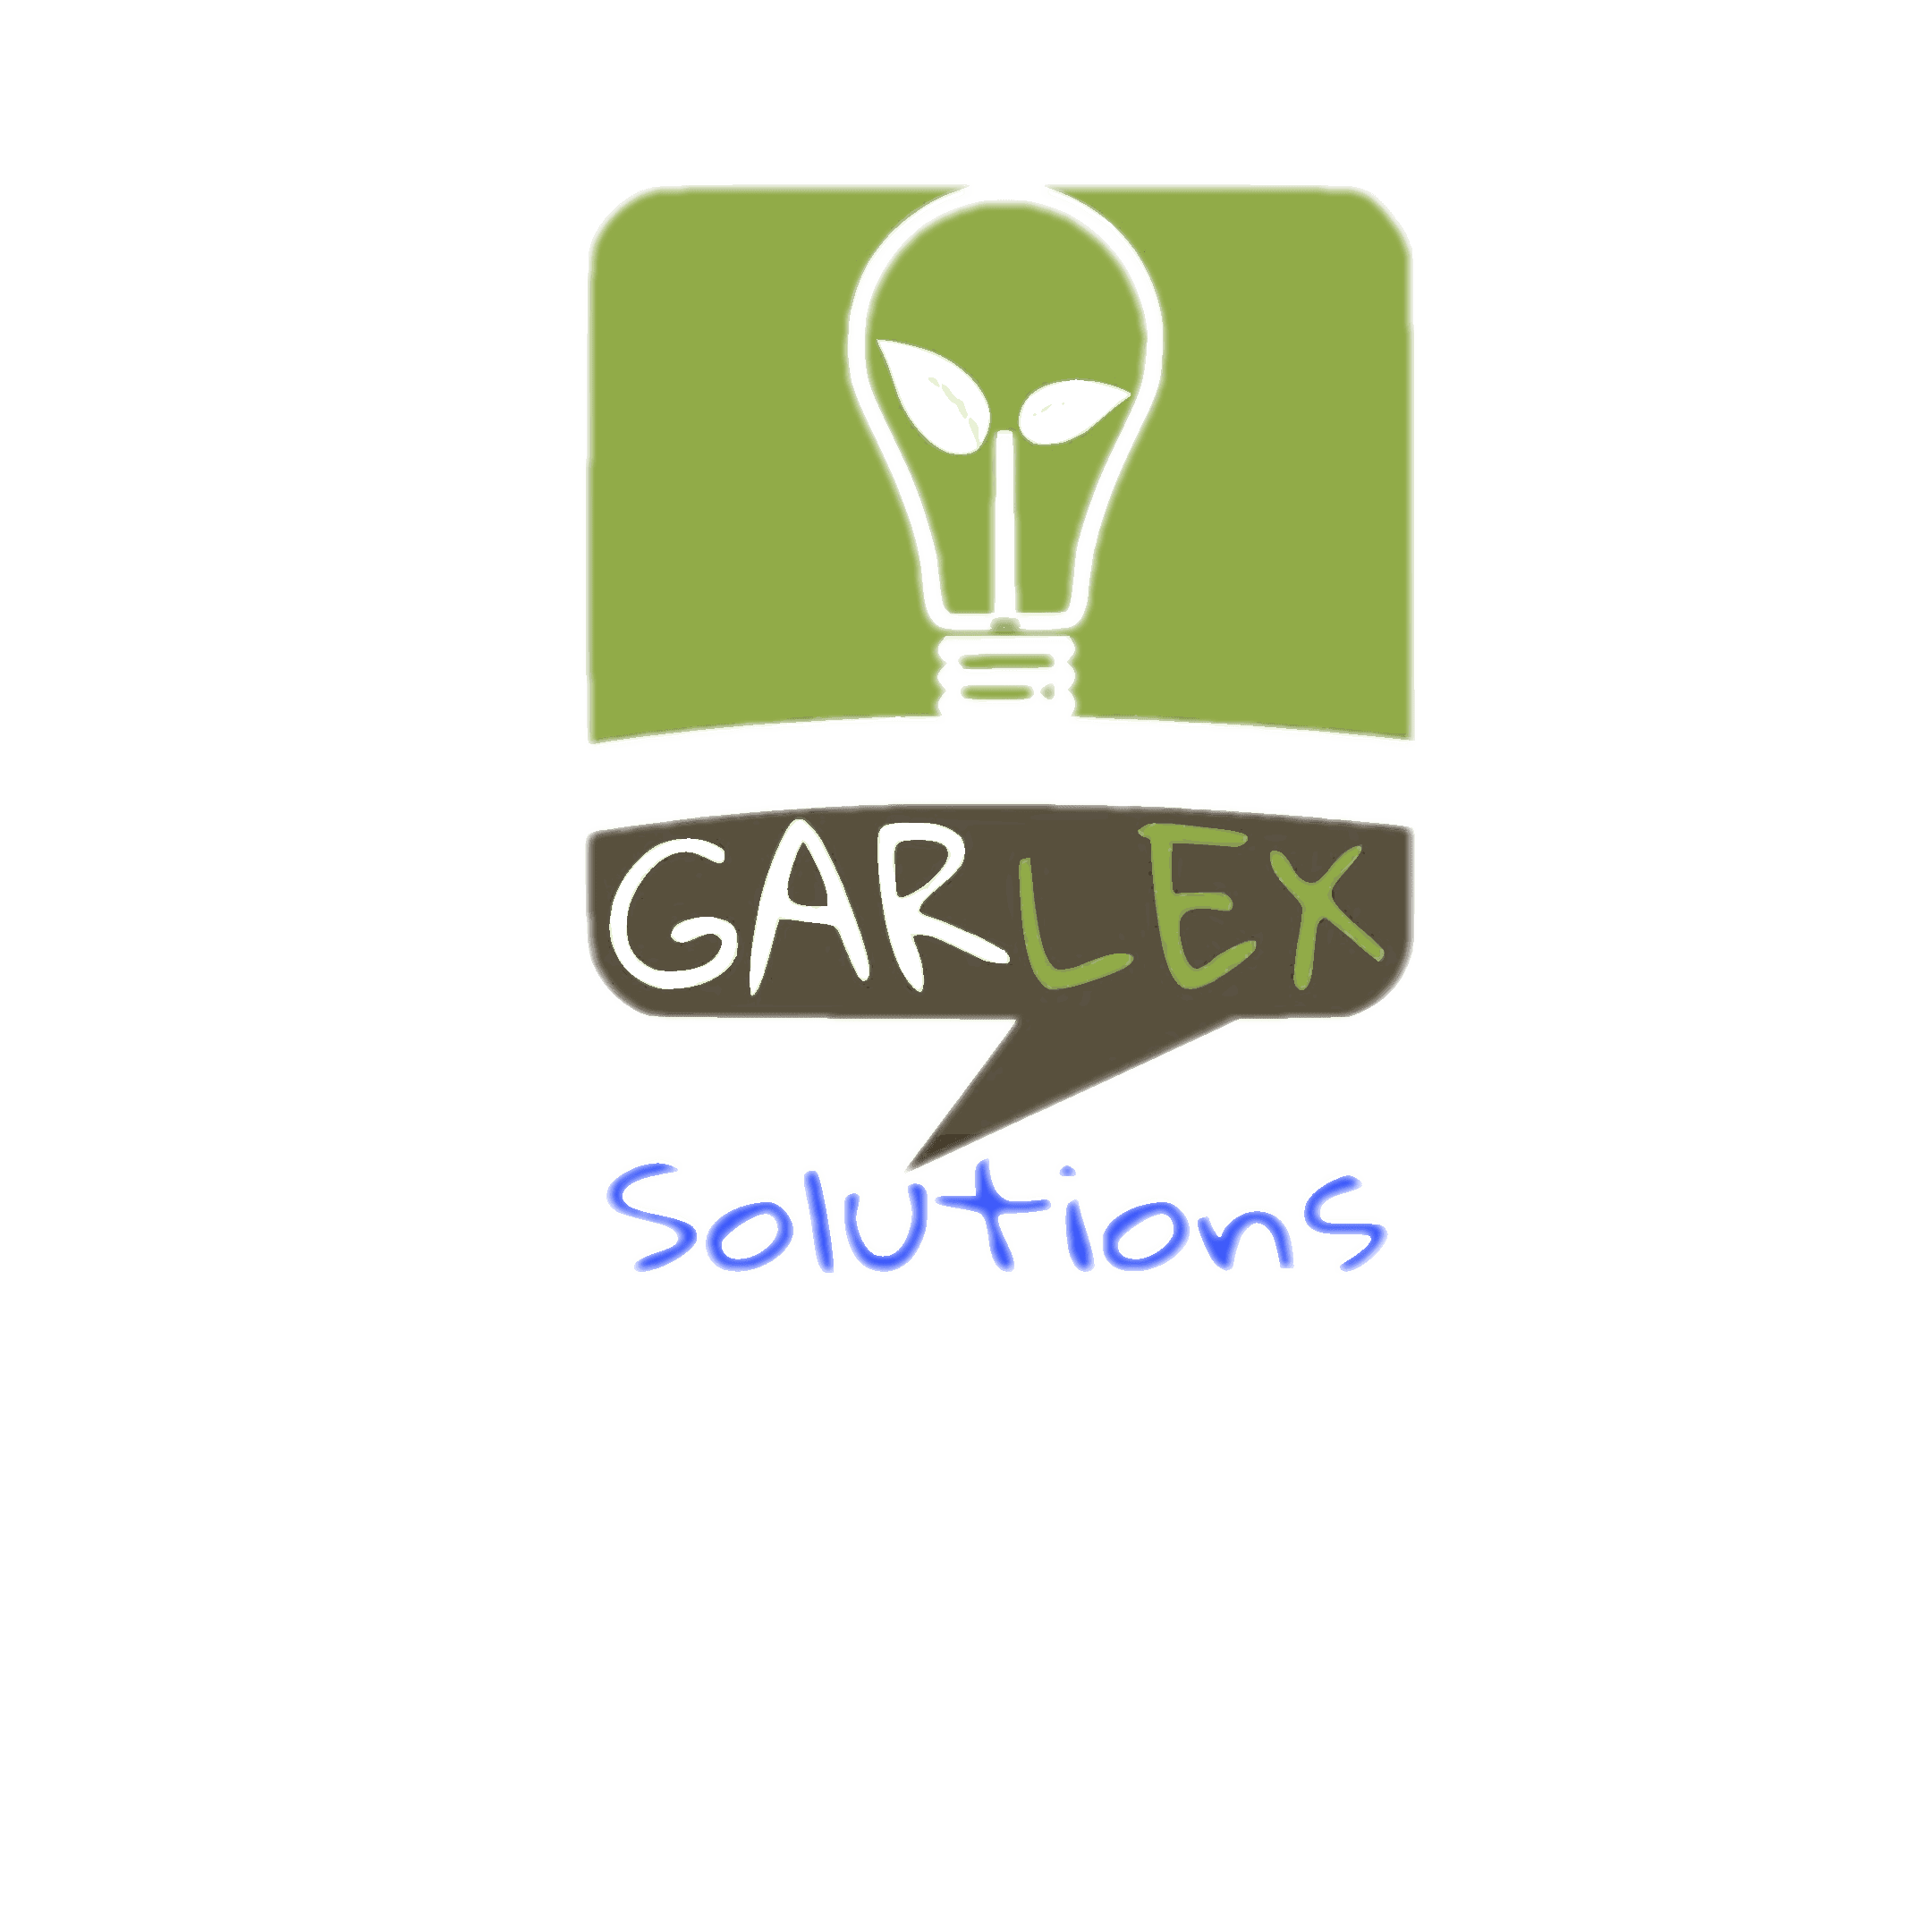 Garlex Solutions